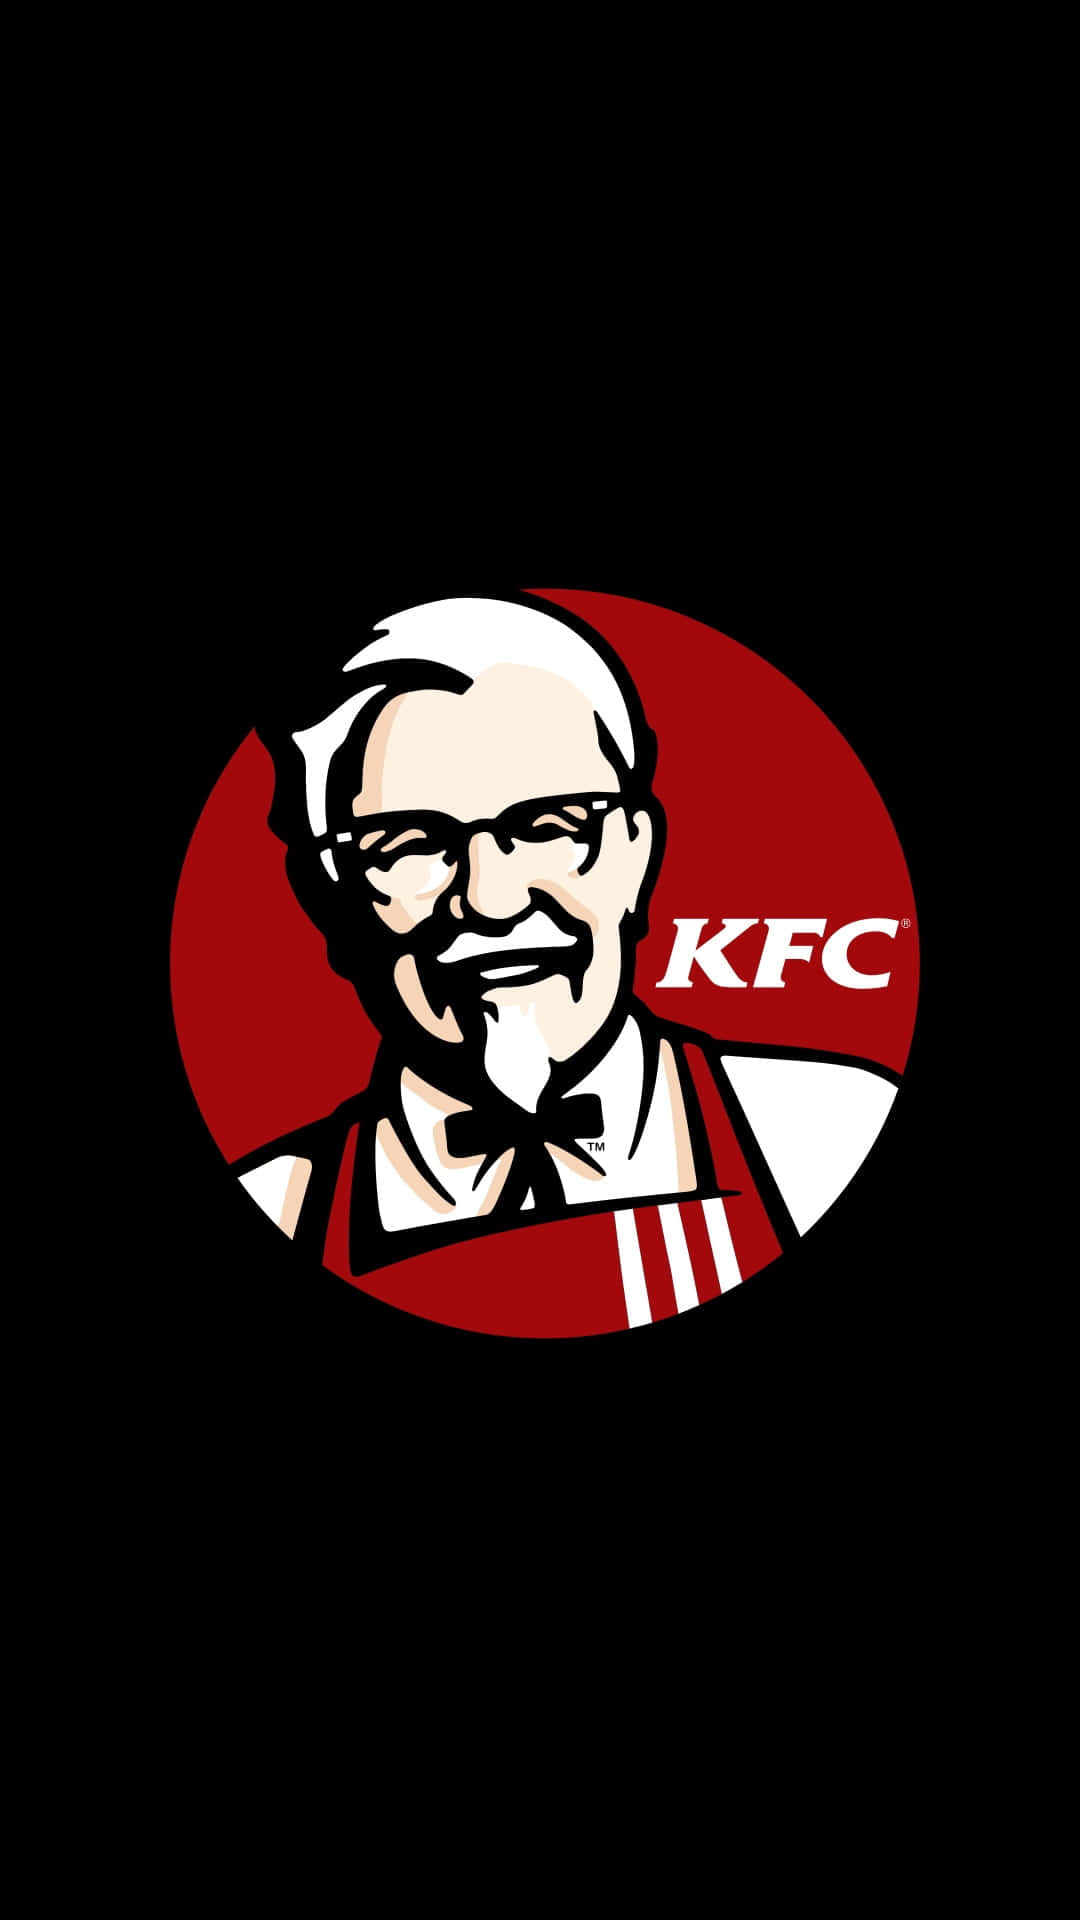 "Finger lickin' good food from KFC"